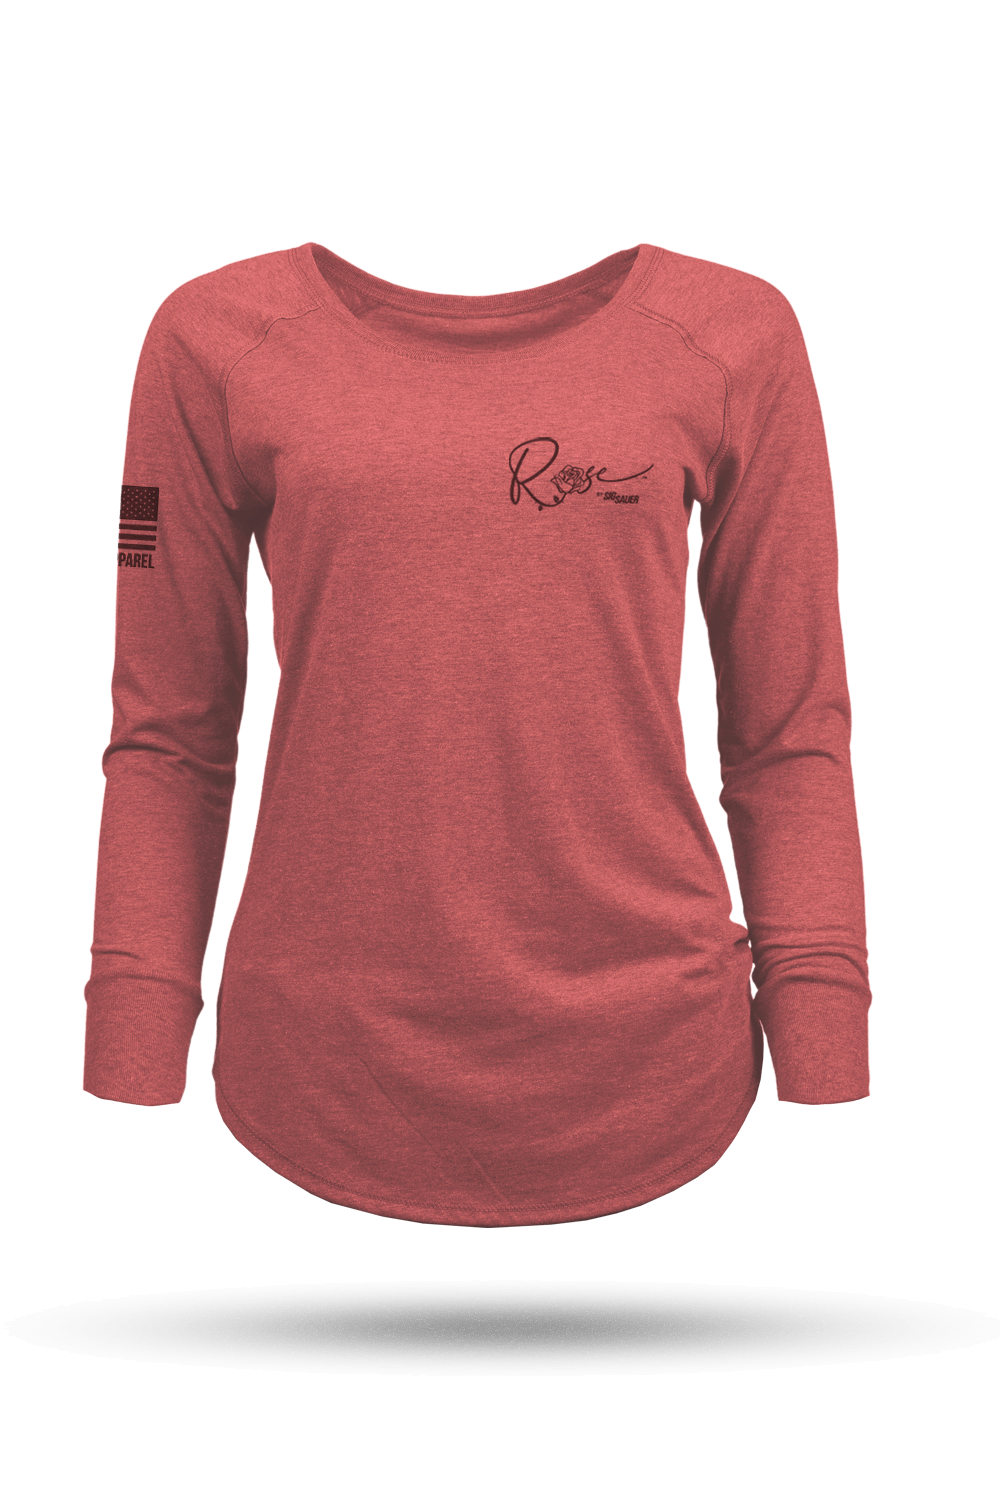 Women's Long-Sleeve Shirt - Sig Rose V2